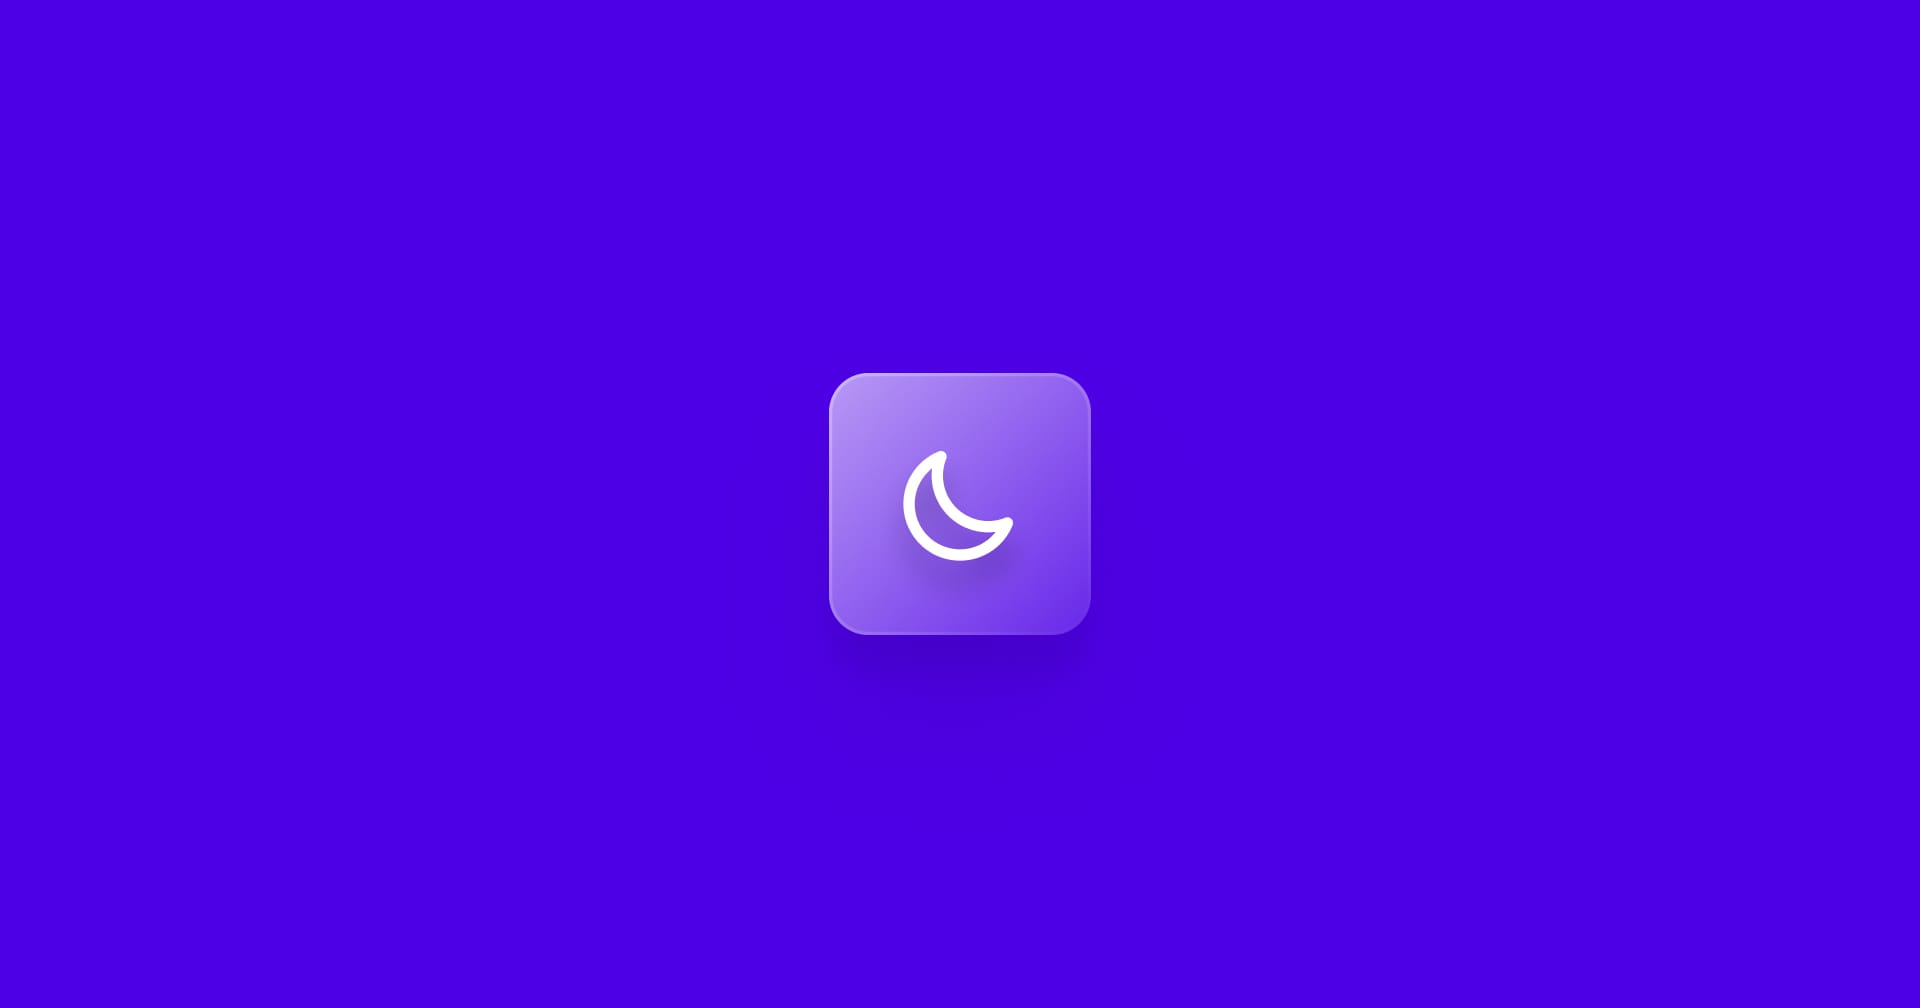 A dark mode icon on a blue-ish purple background